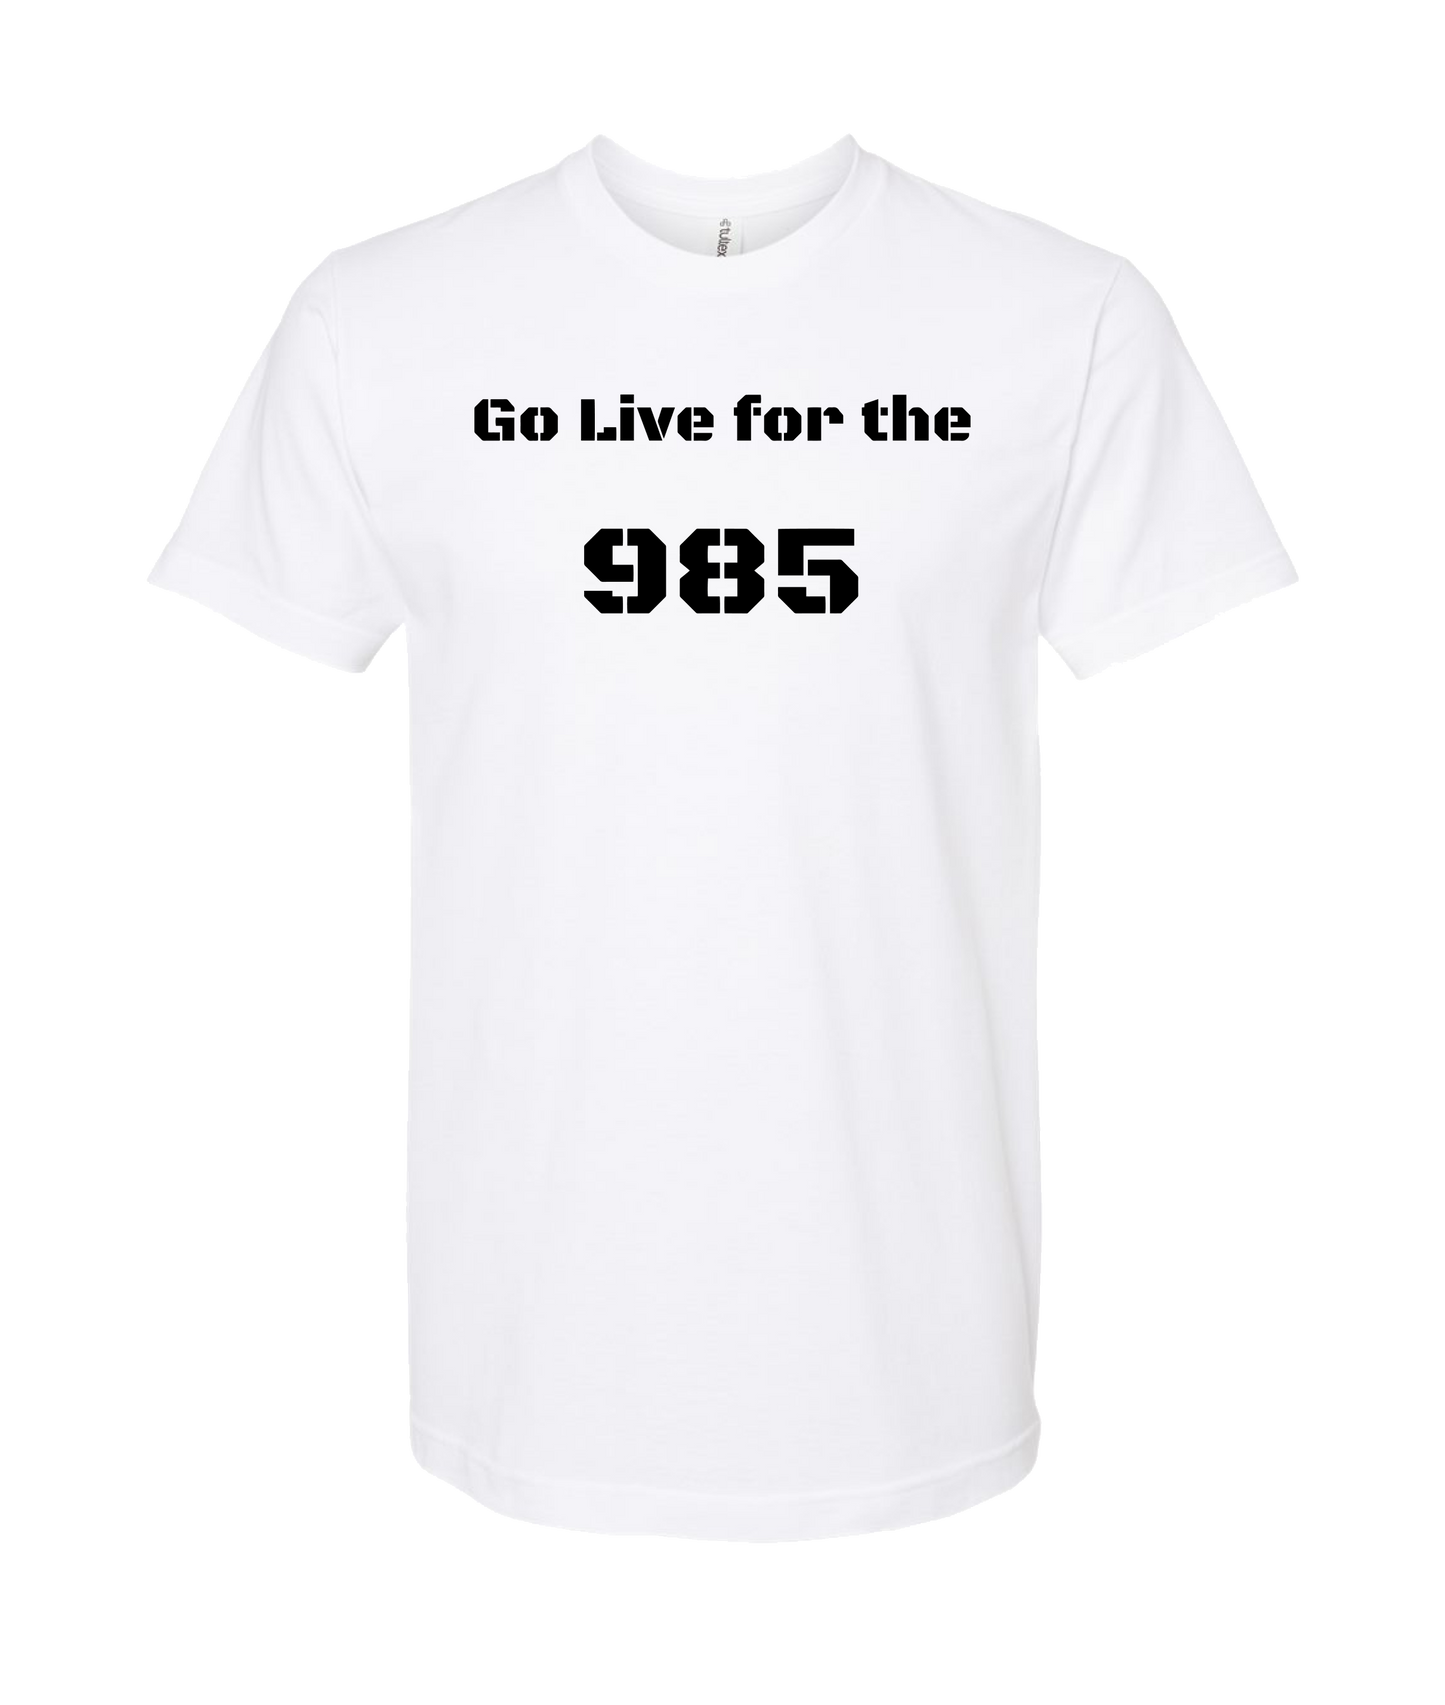 985Chris - Go Live for the 985 - White T-Shirt